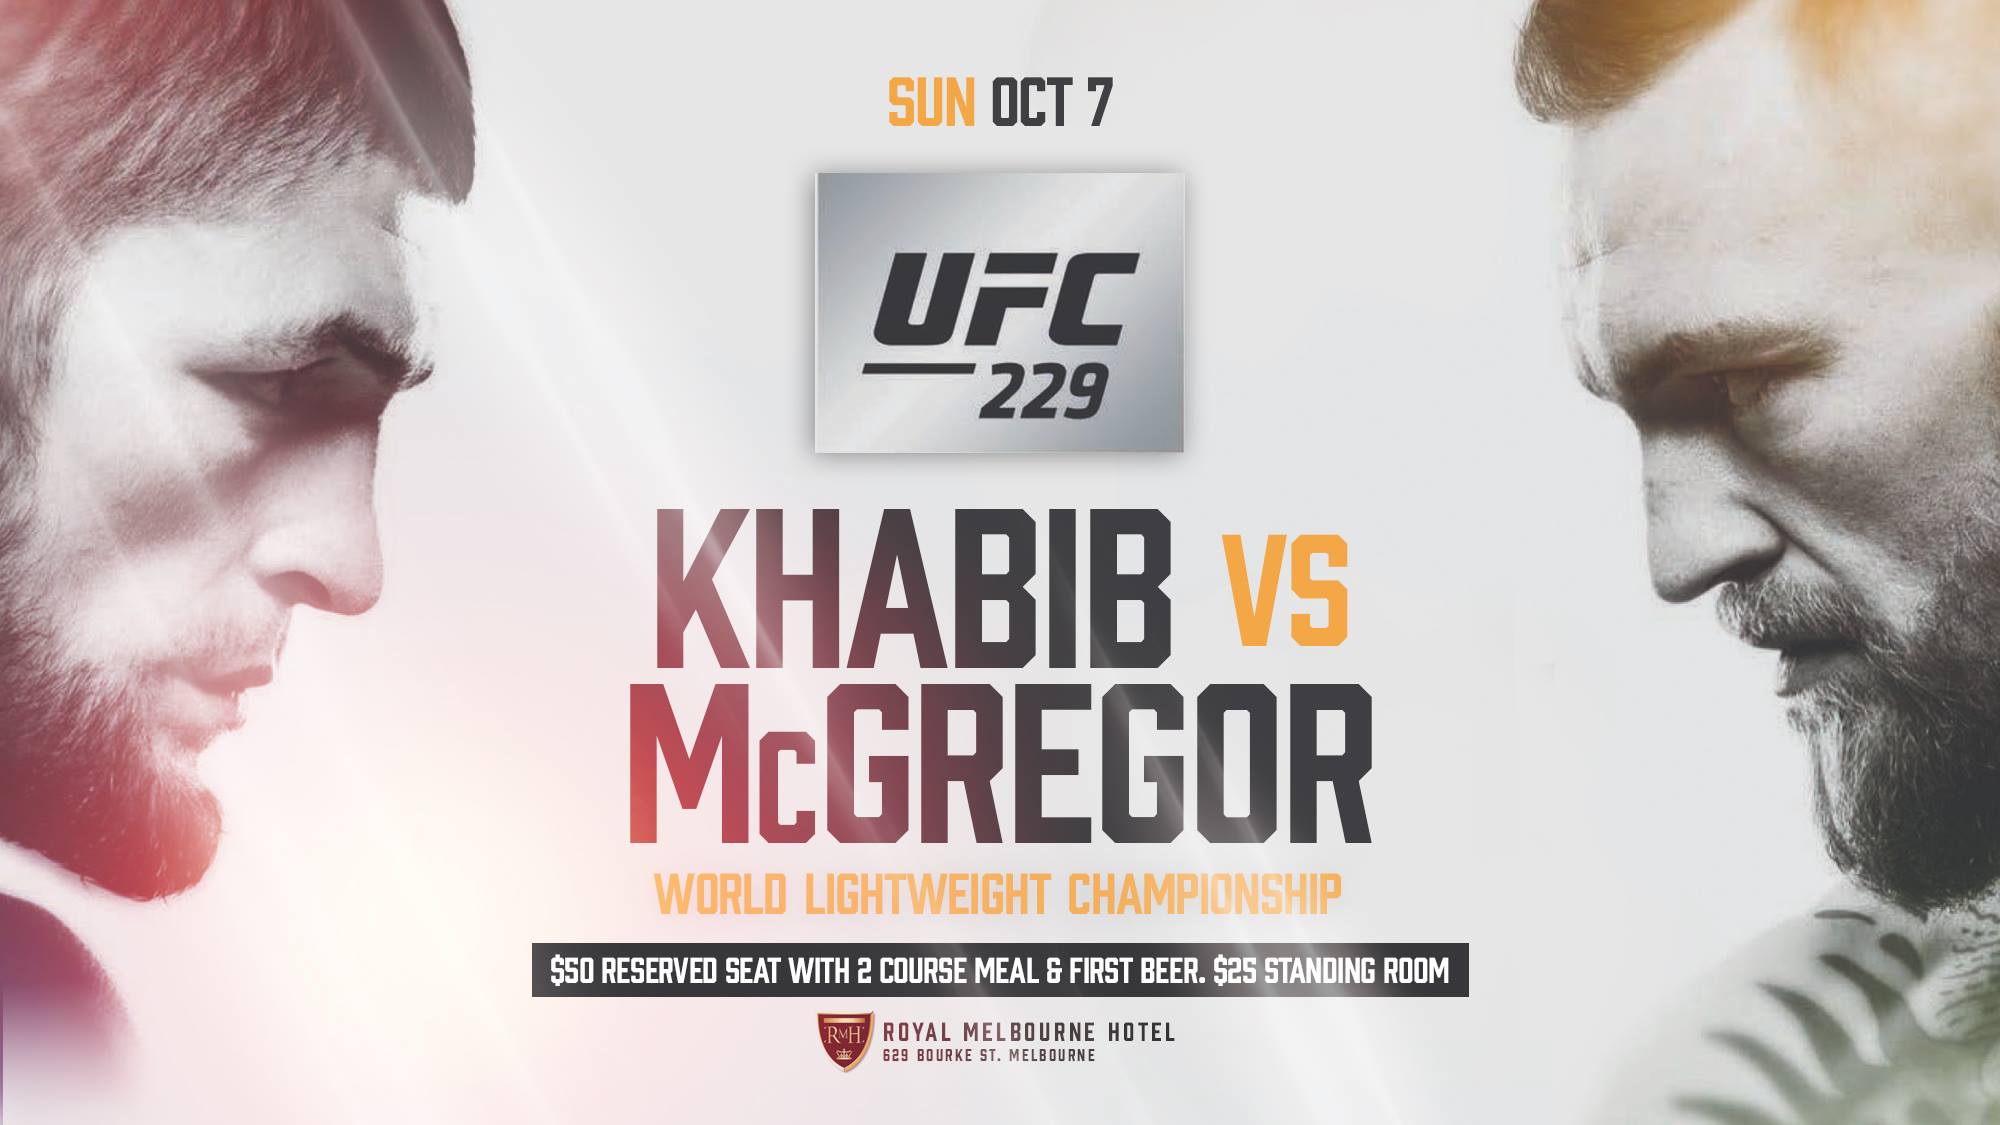 UFC 229 - KHABIB VS MCGREGOR - WORLD LIGHTWEIGHT CHAMPIONSHIP - SUNDAY 07 OCTOBER, 2018